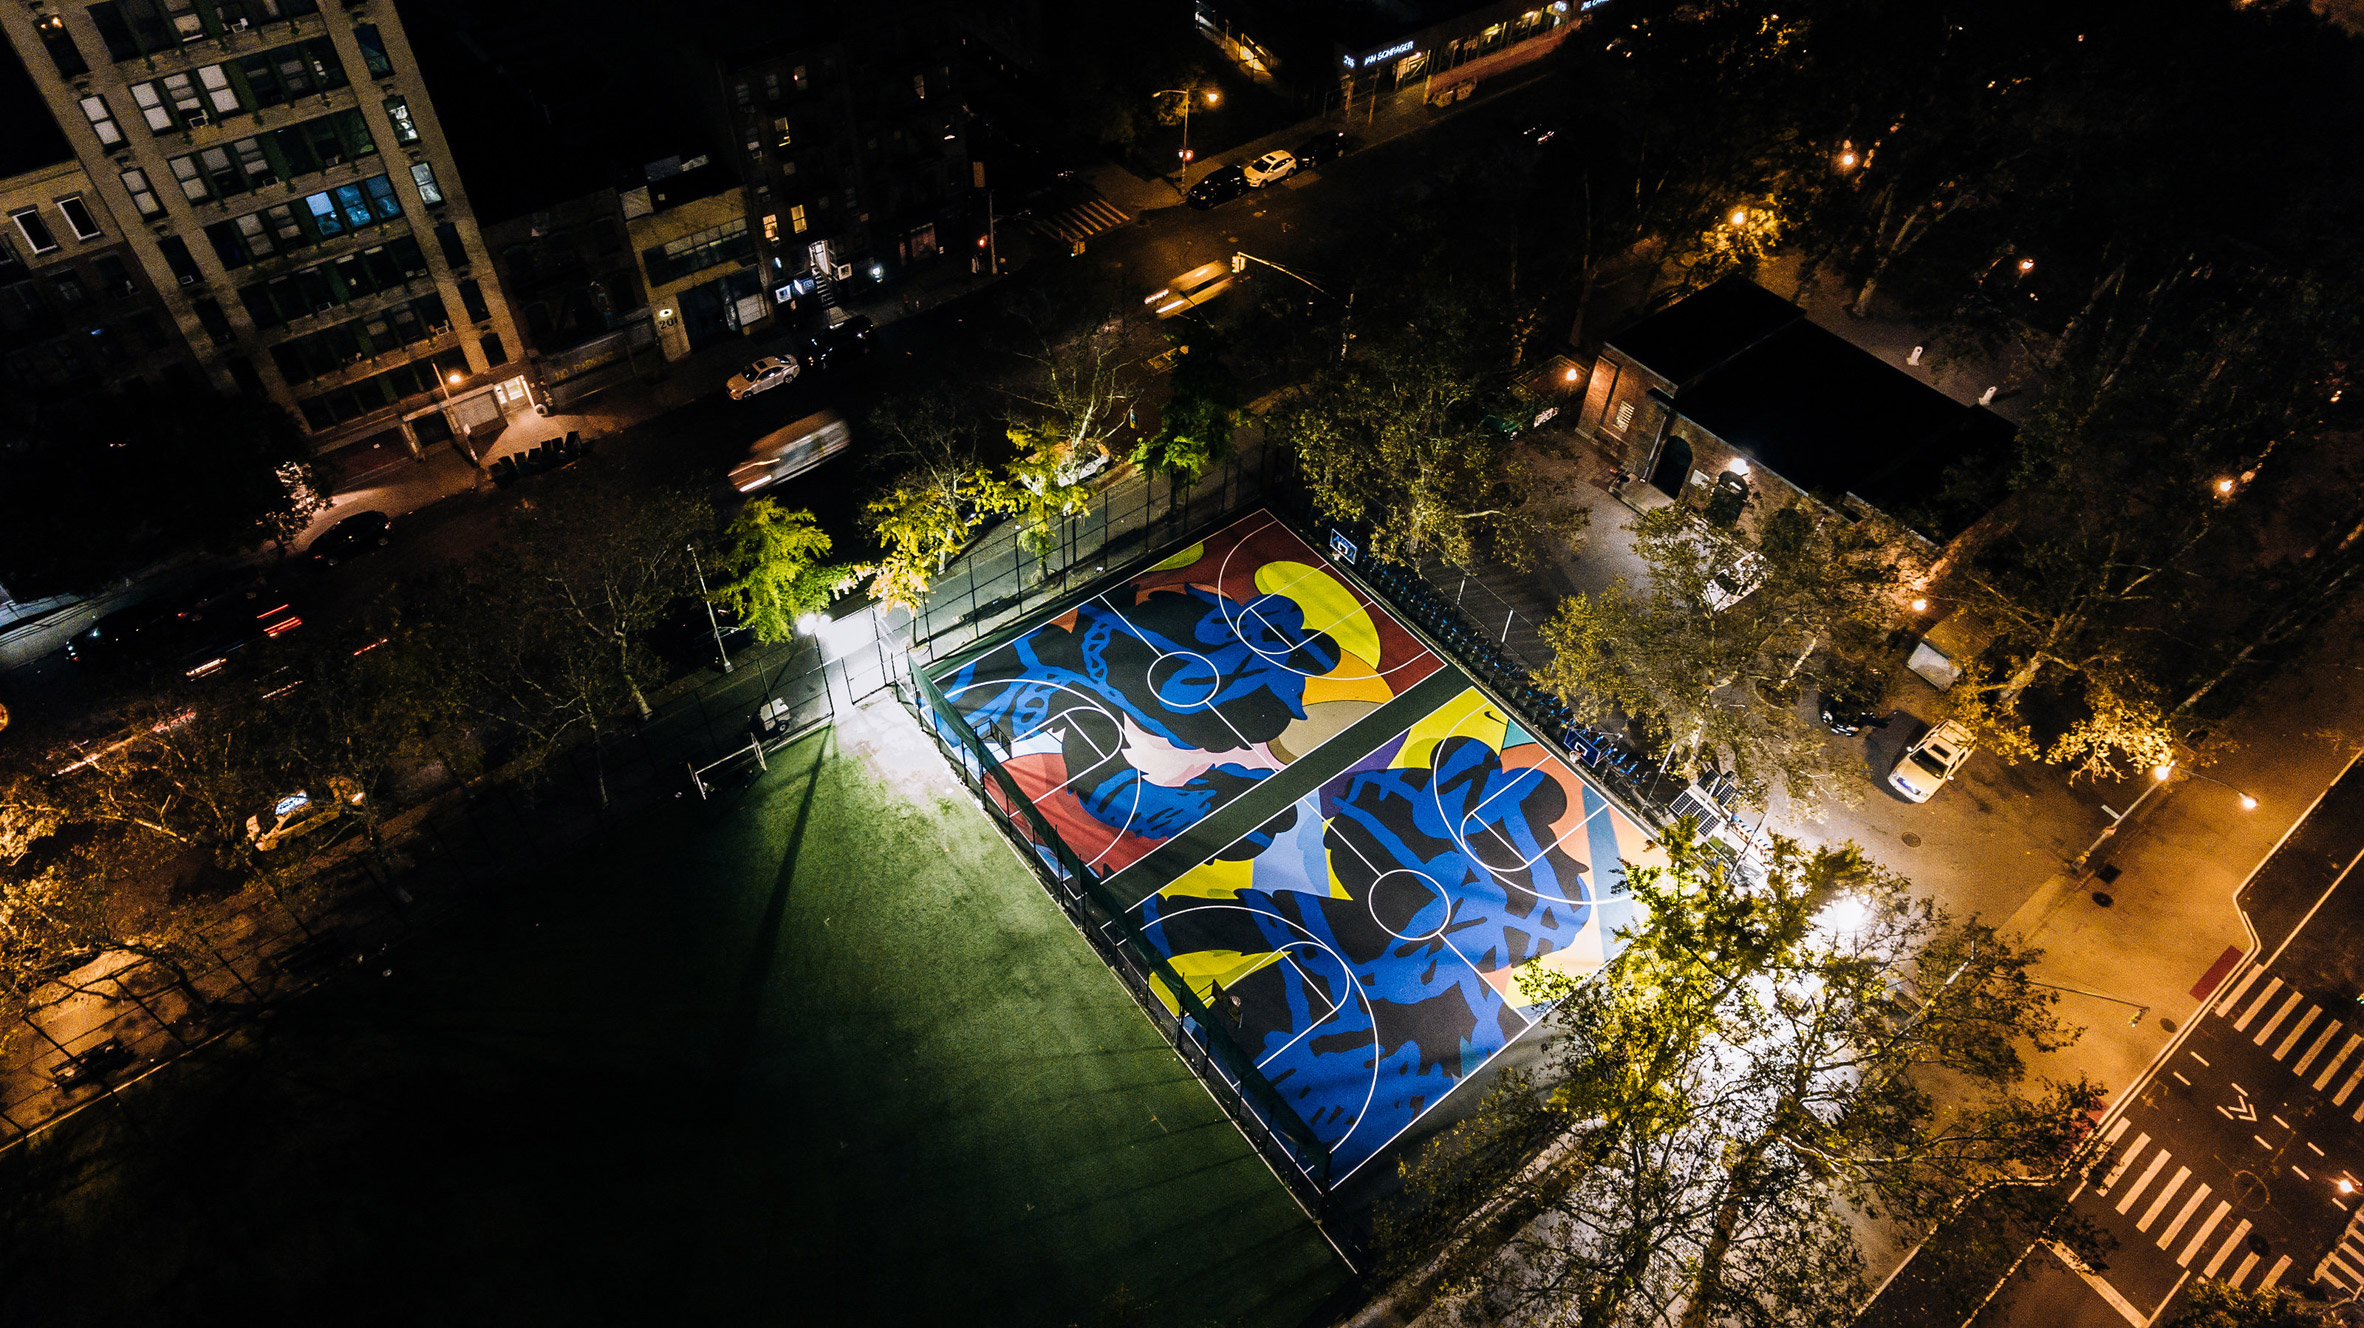 stanton-street-basketball-courts-sport-urban-design-nike-kaws-brian-donnelly-brooklyn-new-york-usa_dezeen_2364_col_1